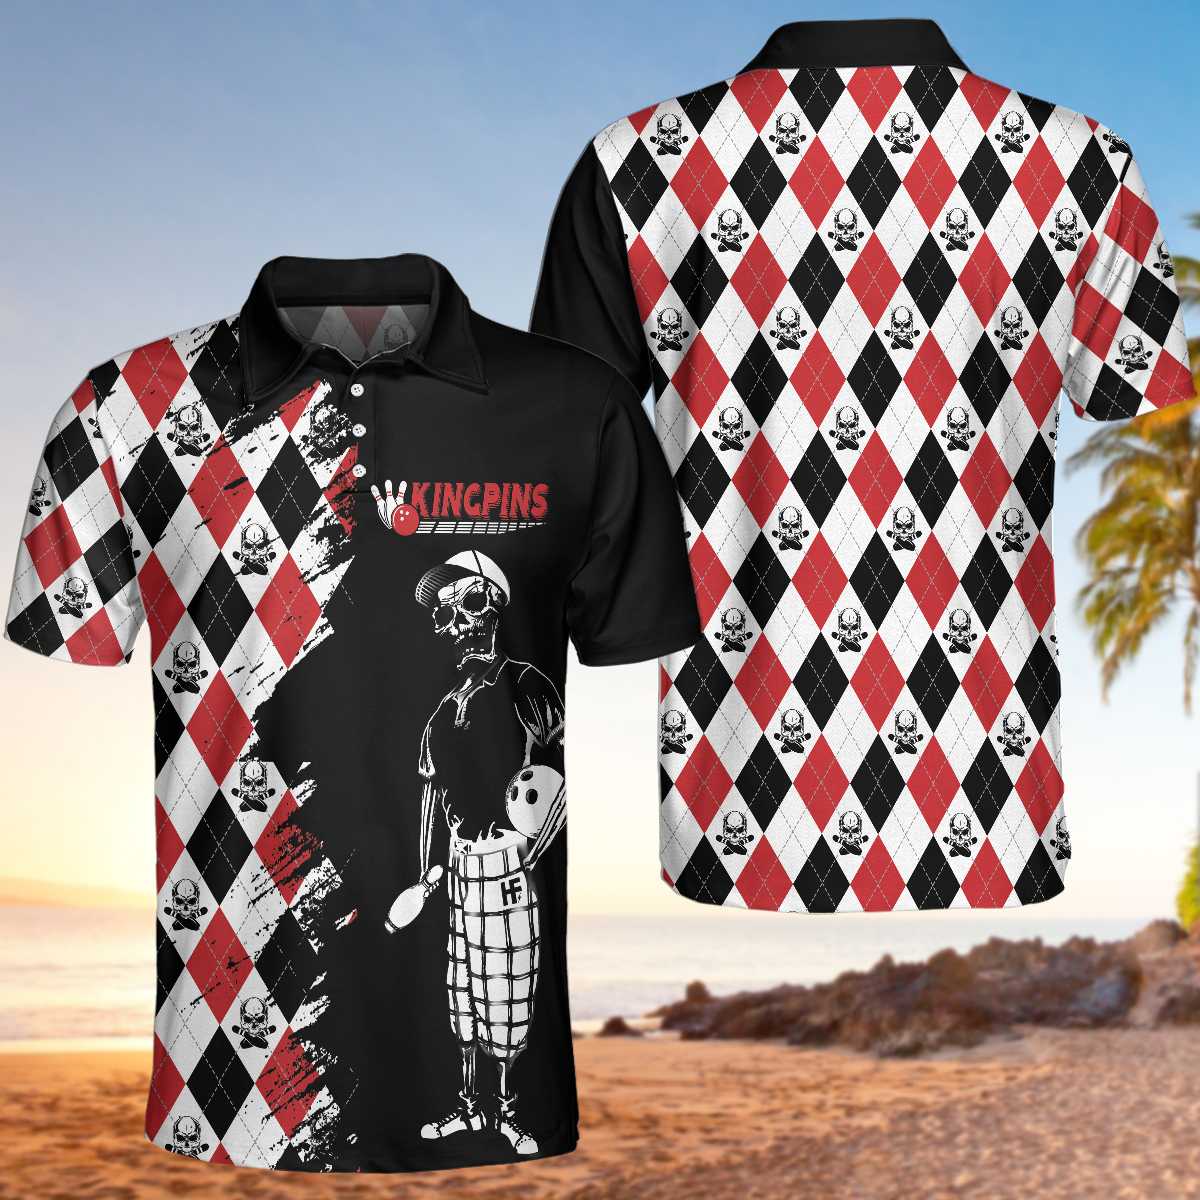 Bowling Red Black White Skull Pattern Short Sleeve Polo Shirt/ Argyle Pattern Polo Shirt/ Best Bowling Shirt For Men Coolspod